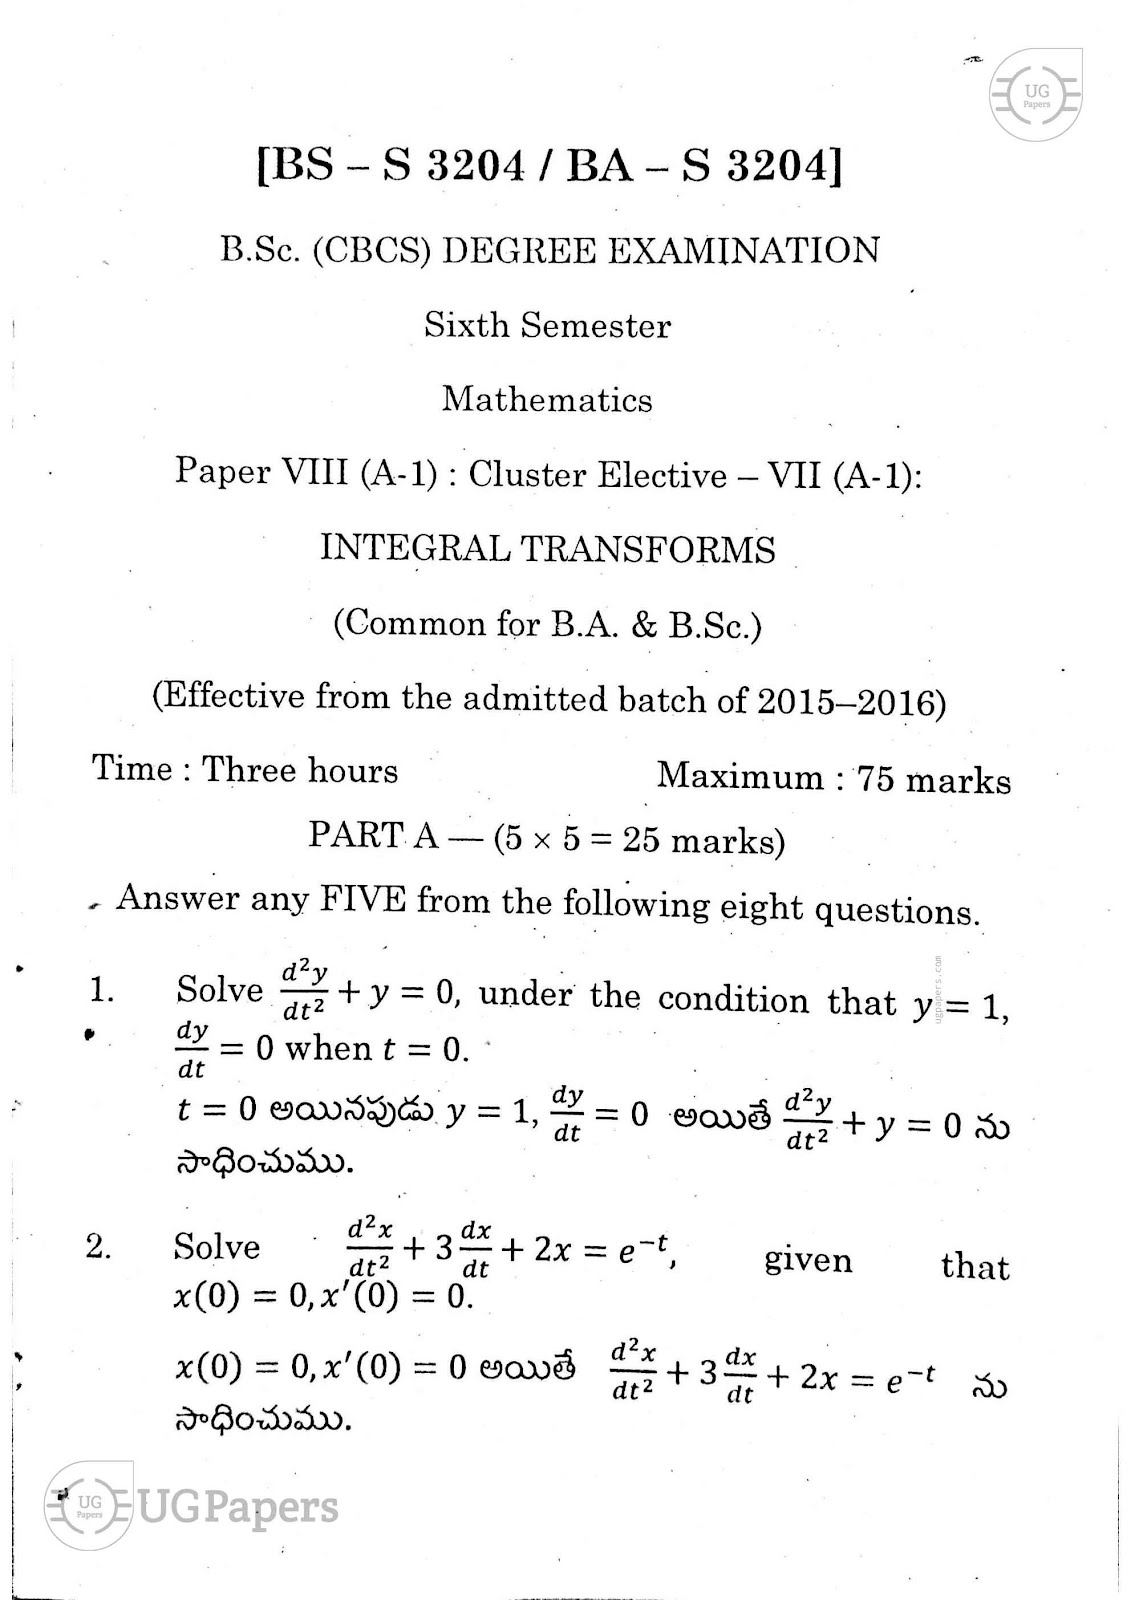 ugpapers.com, Andhra University, Semester 6, Maths cluster-1 7a-1 2020